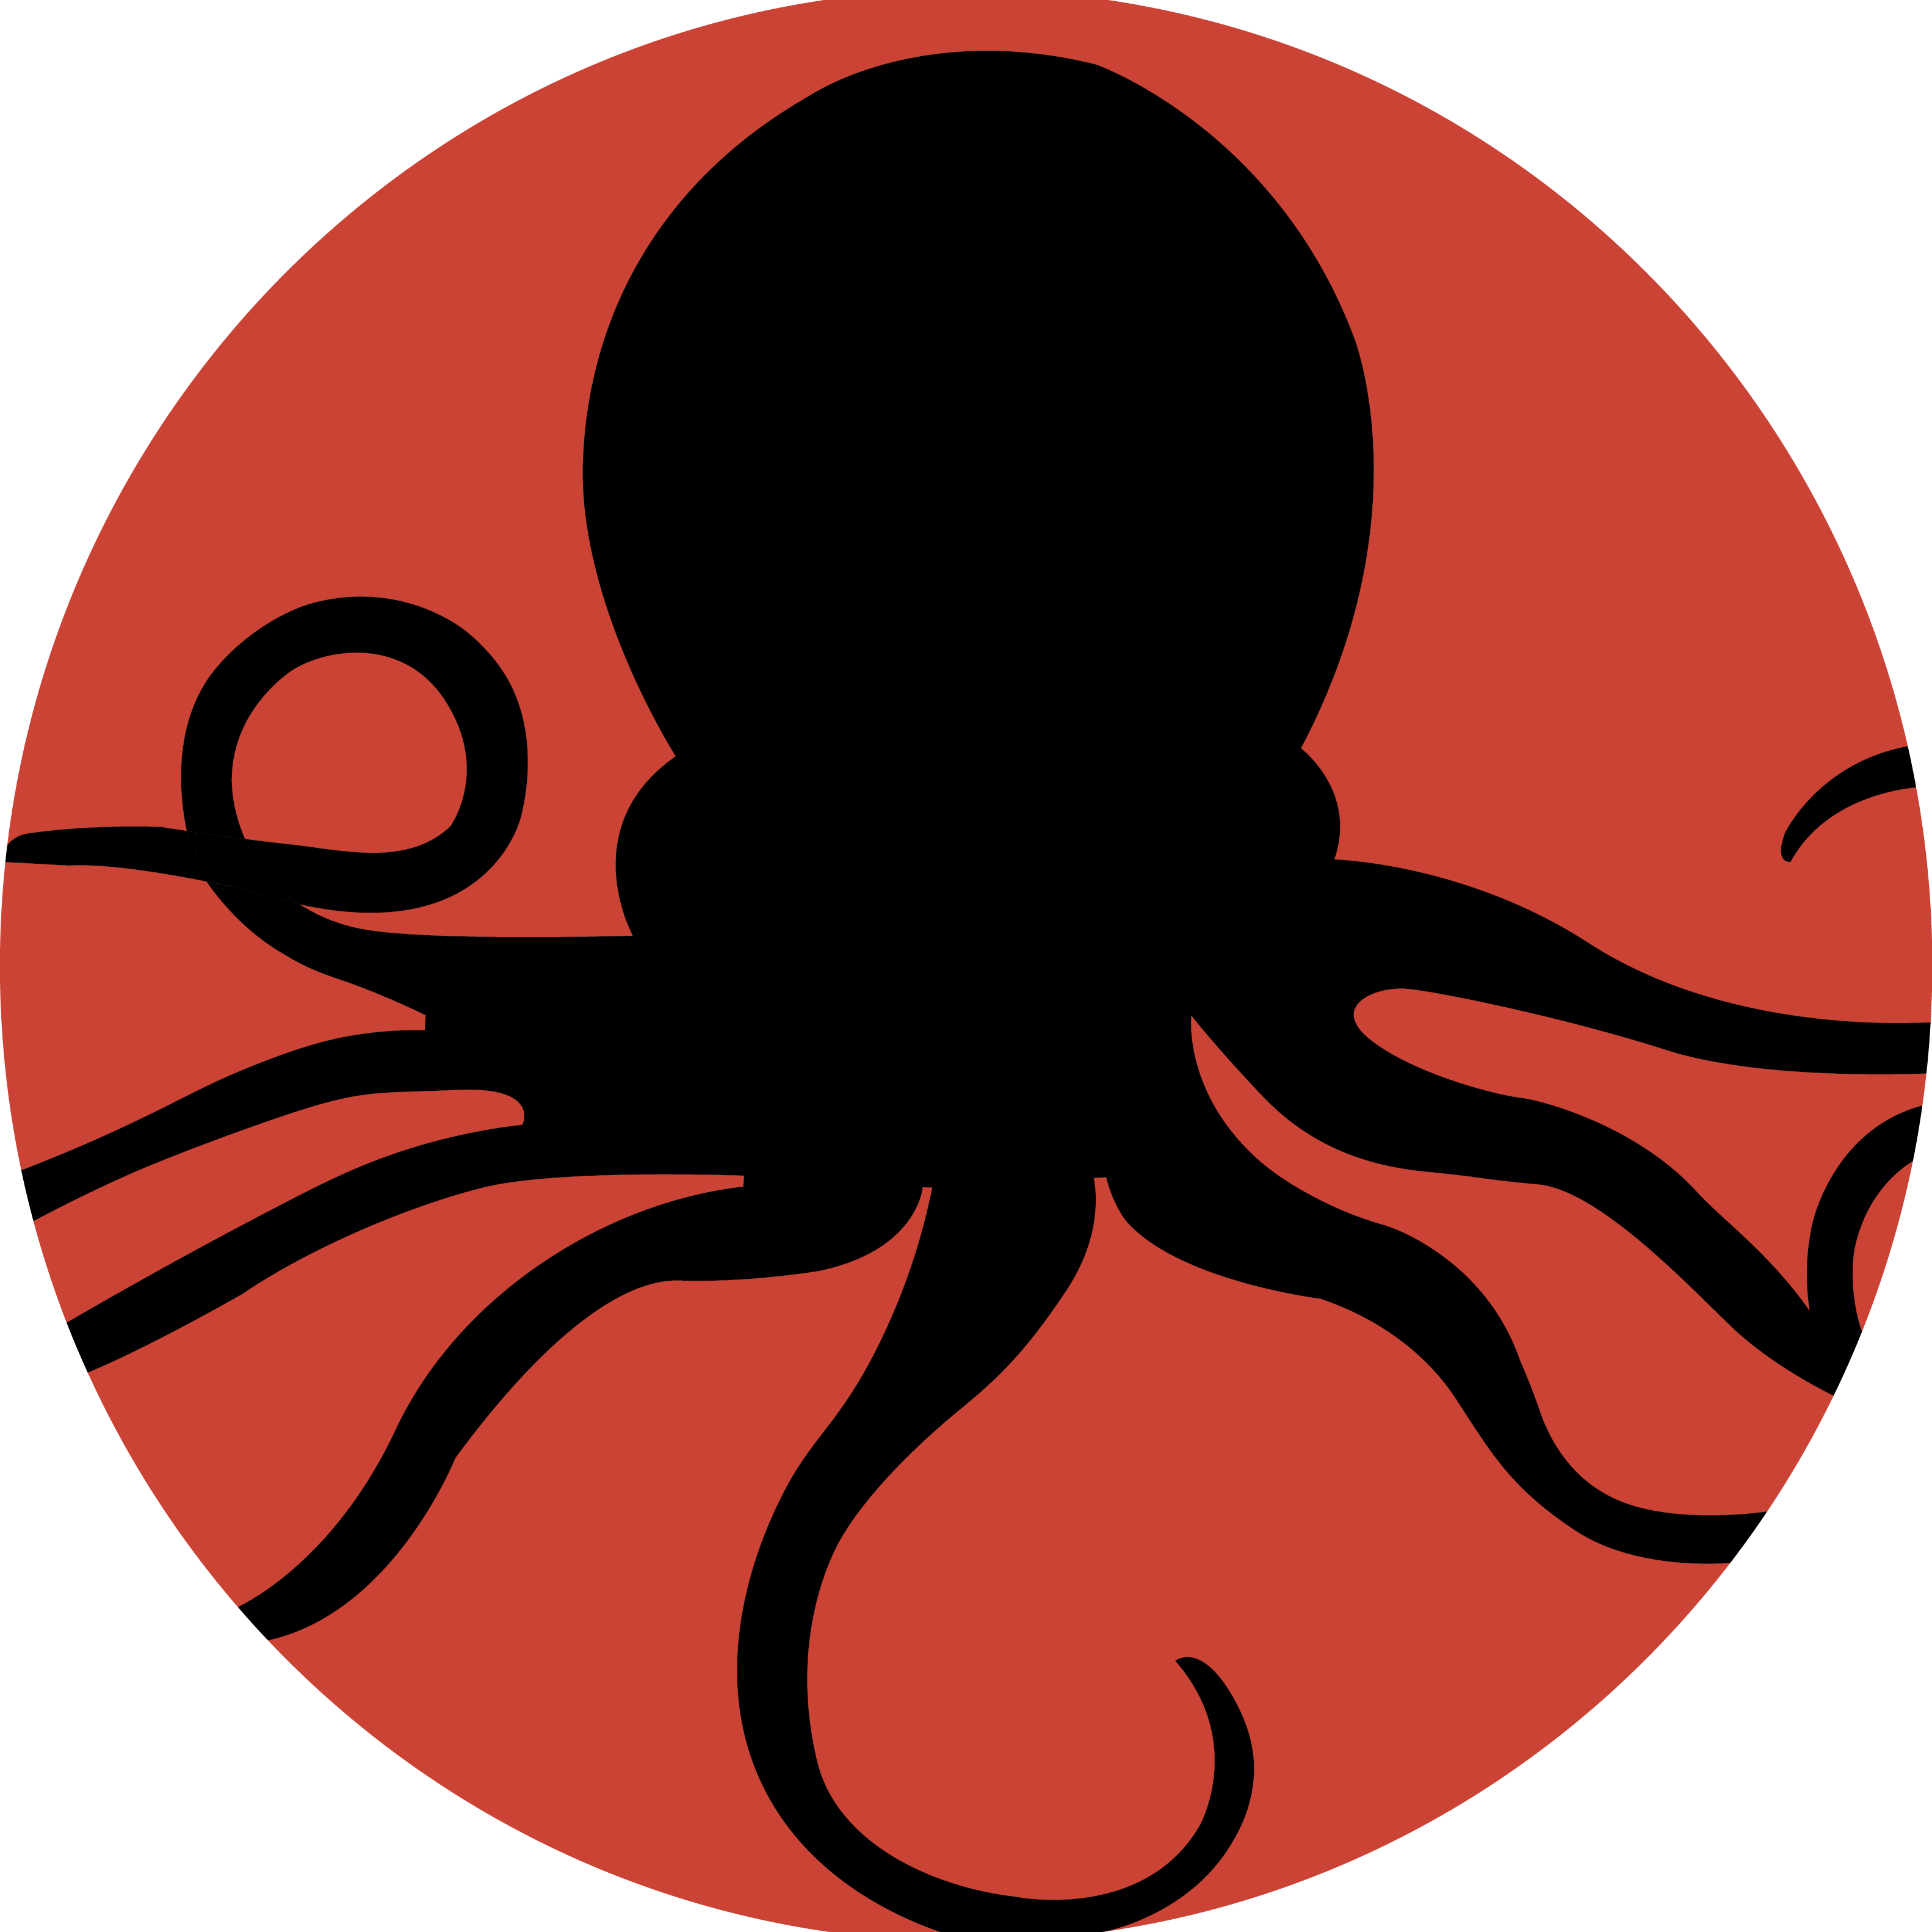 Octopus Cephalopod Animal Invertebrate Clip art - eva longoria 3165*3165  transprent Png Free Download - Flower, Silhouette, Cephalopod.